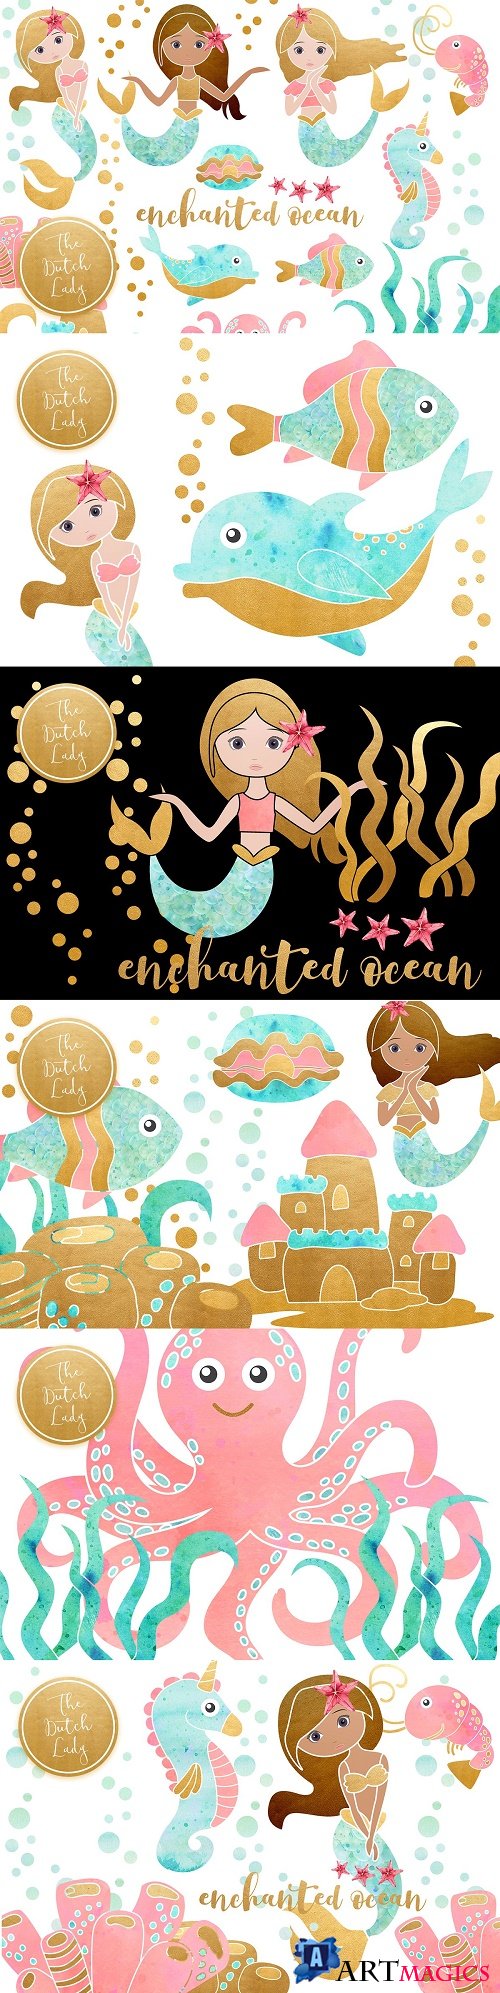 Enchanted Ocean Clipart Set - 3919486 » Artmagics.ru - проекты и лучшая ...